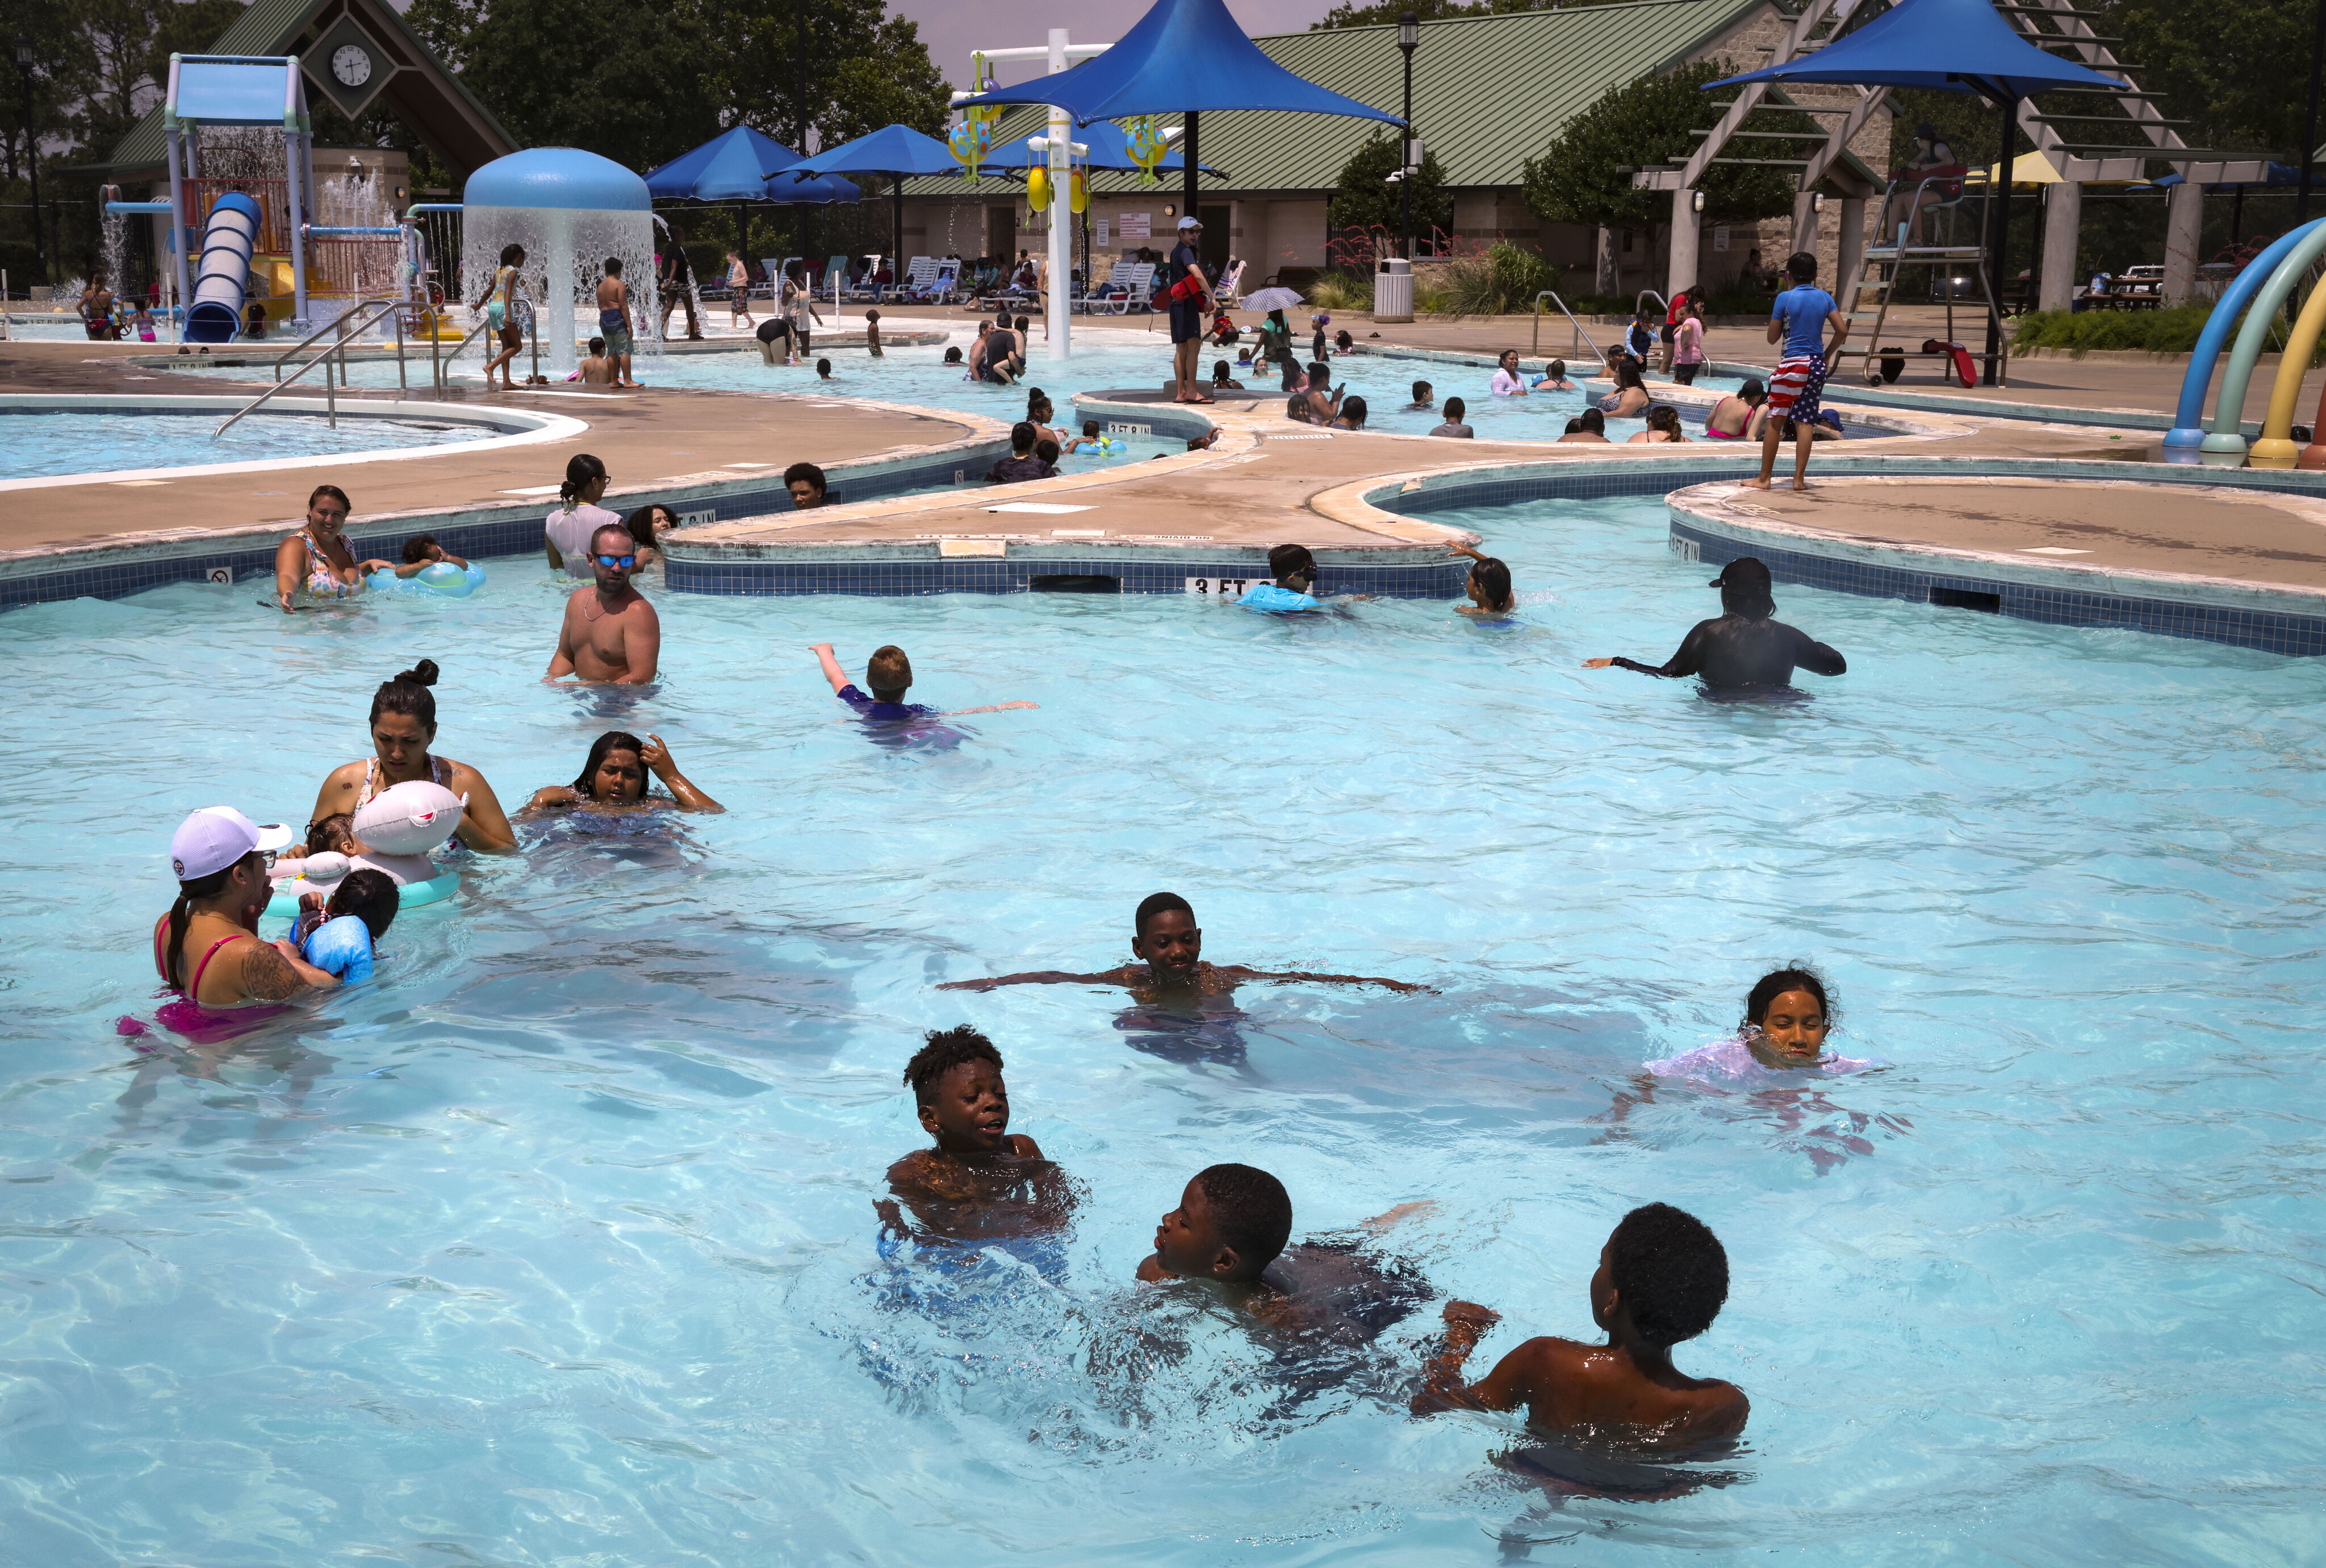 Around Plano: The Top Public Swimming Pools & Splash Pads